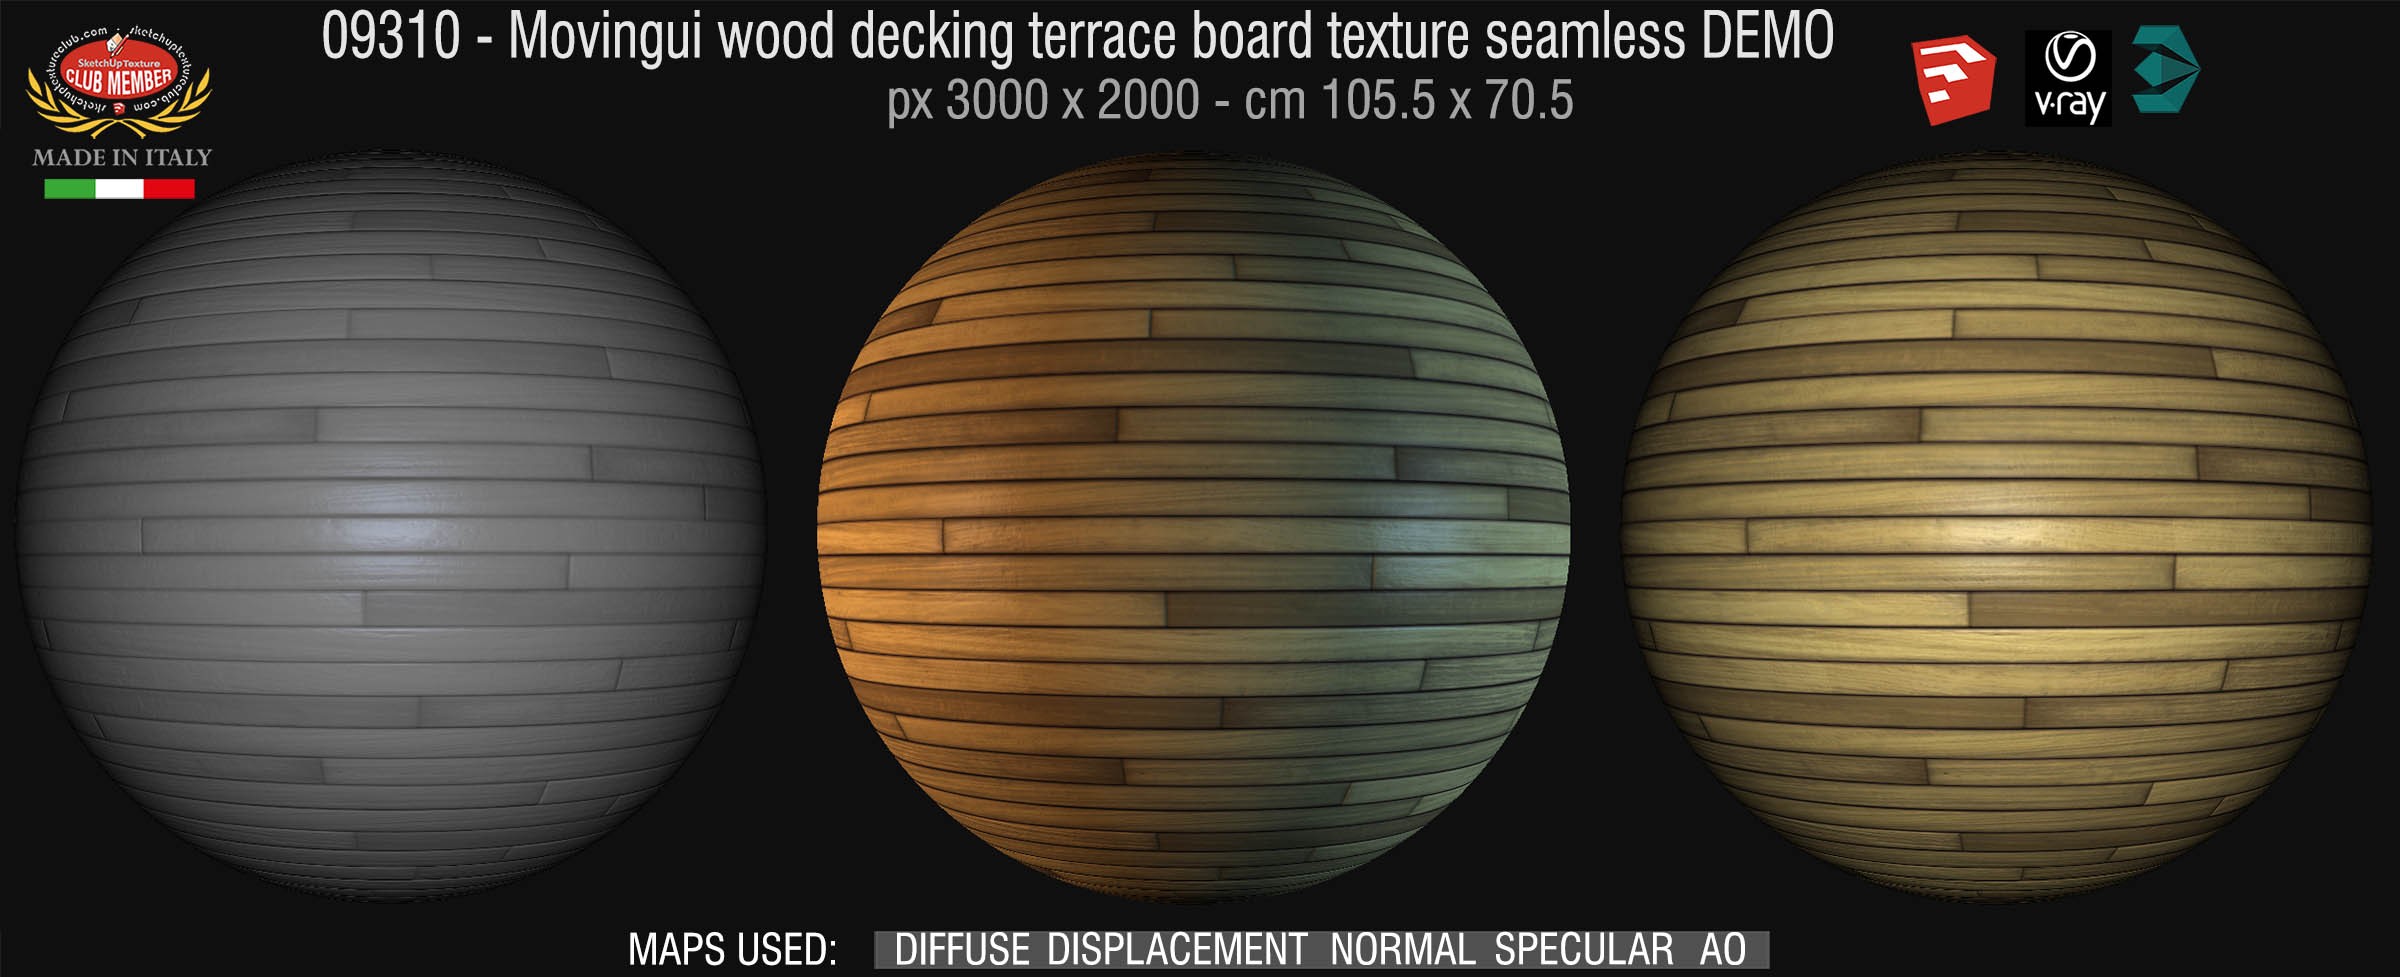 09310 HR Movingui wood decking terrace board texture seamless + maps DEMO